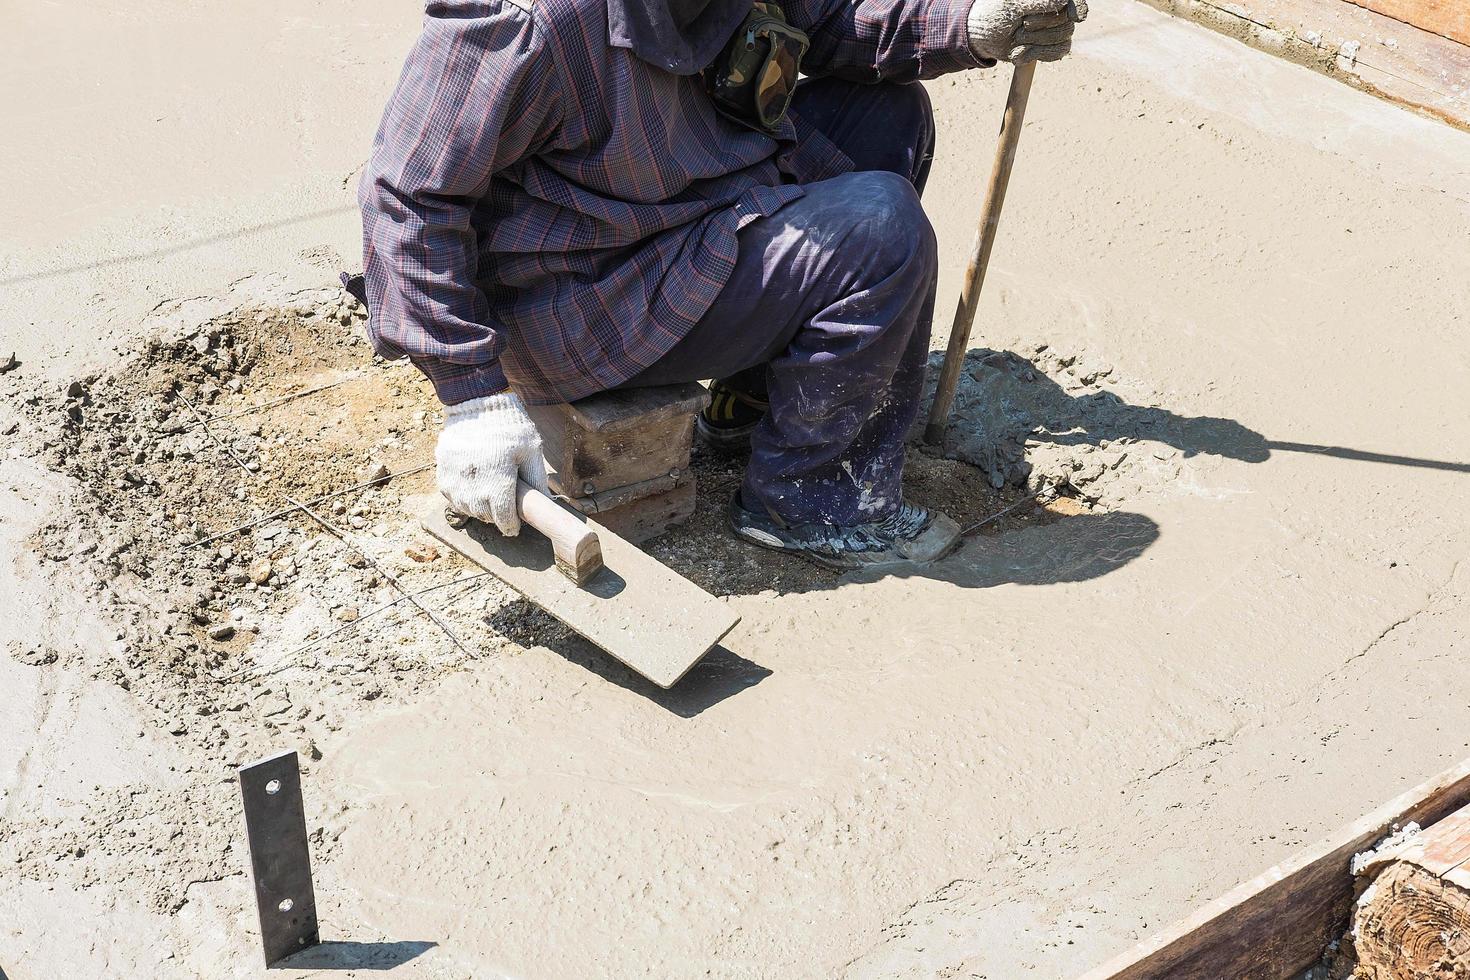 bouwvakkers die cement pleisteren foto